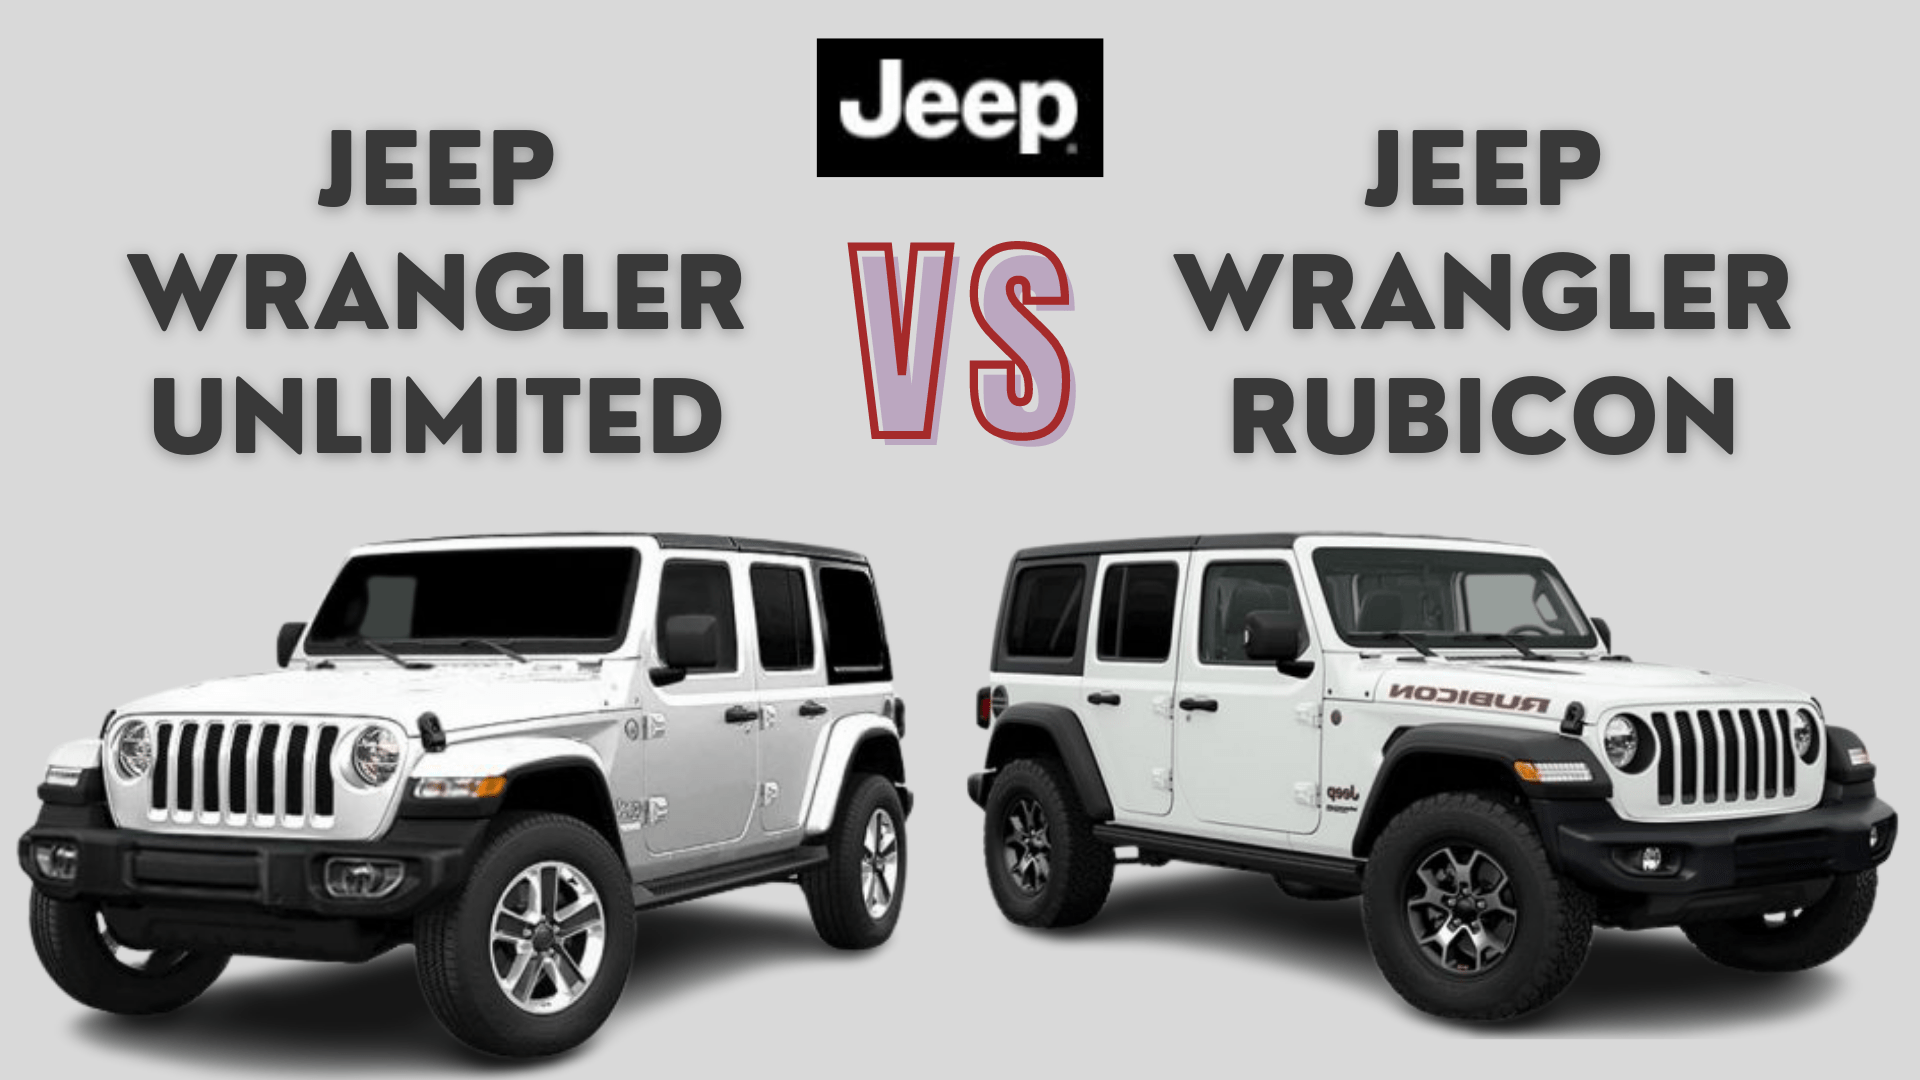 Arriba 78+ imagen jeep wrangler vs wrangler unlimited